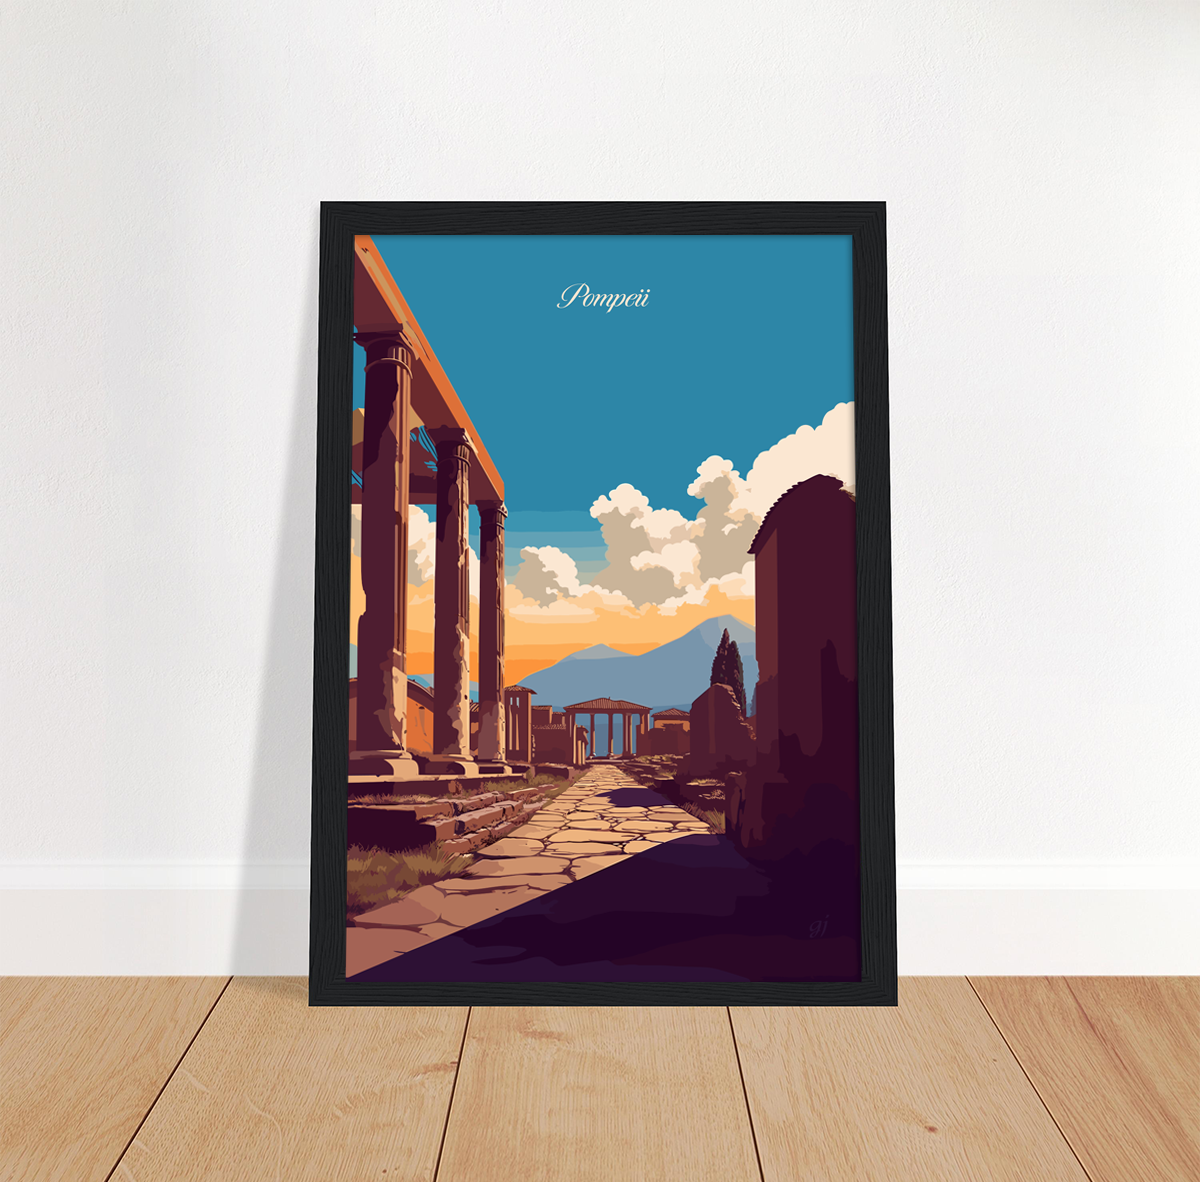 Pompeii poster by bon voyage design